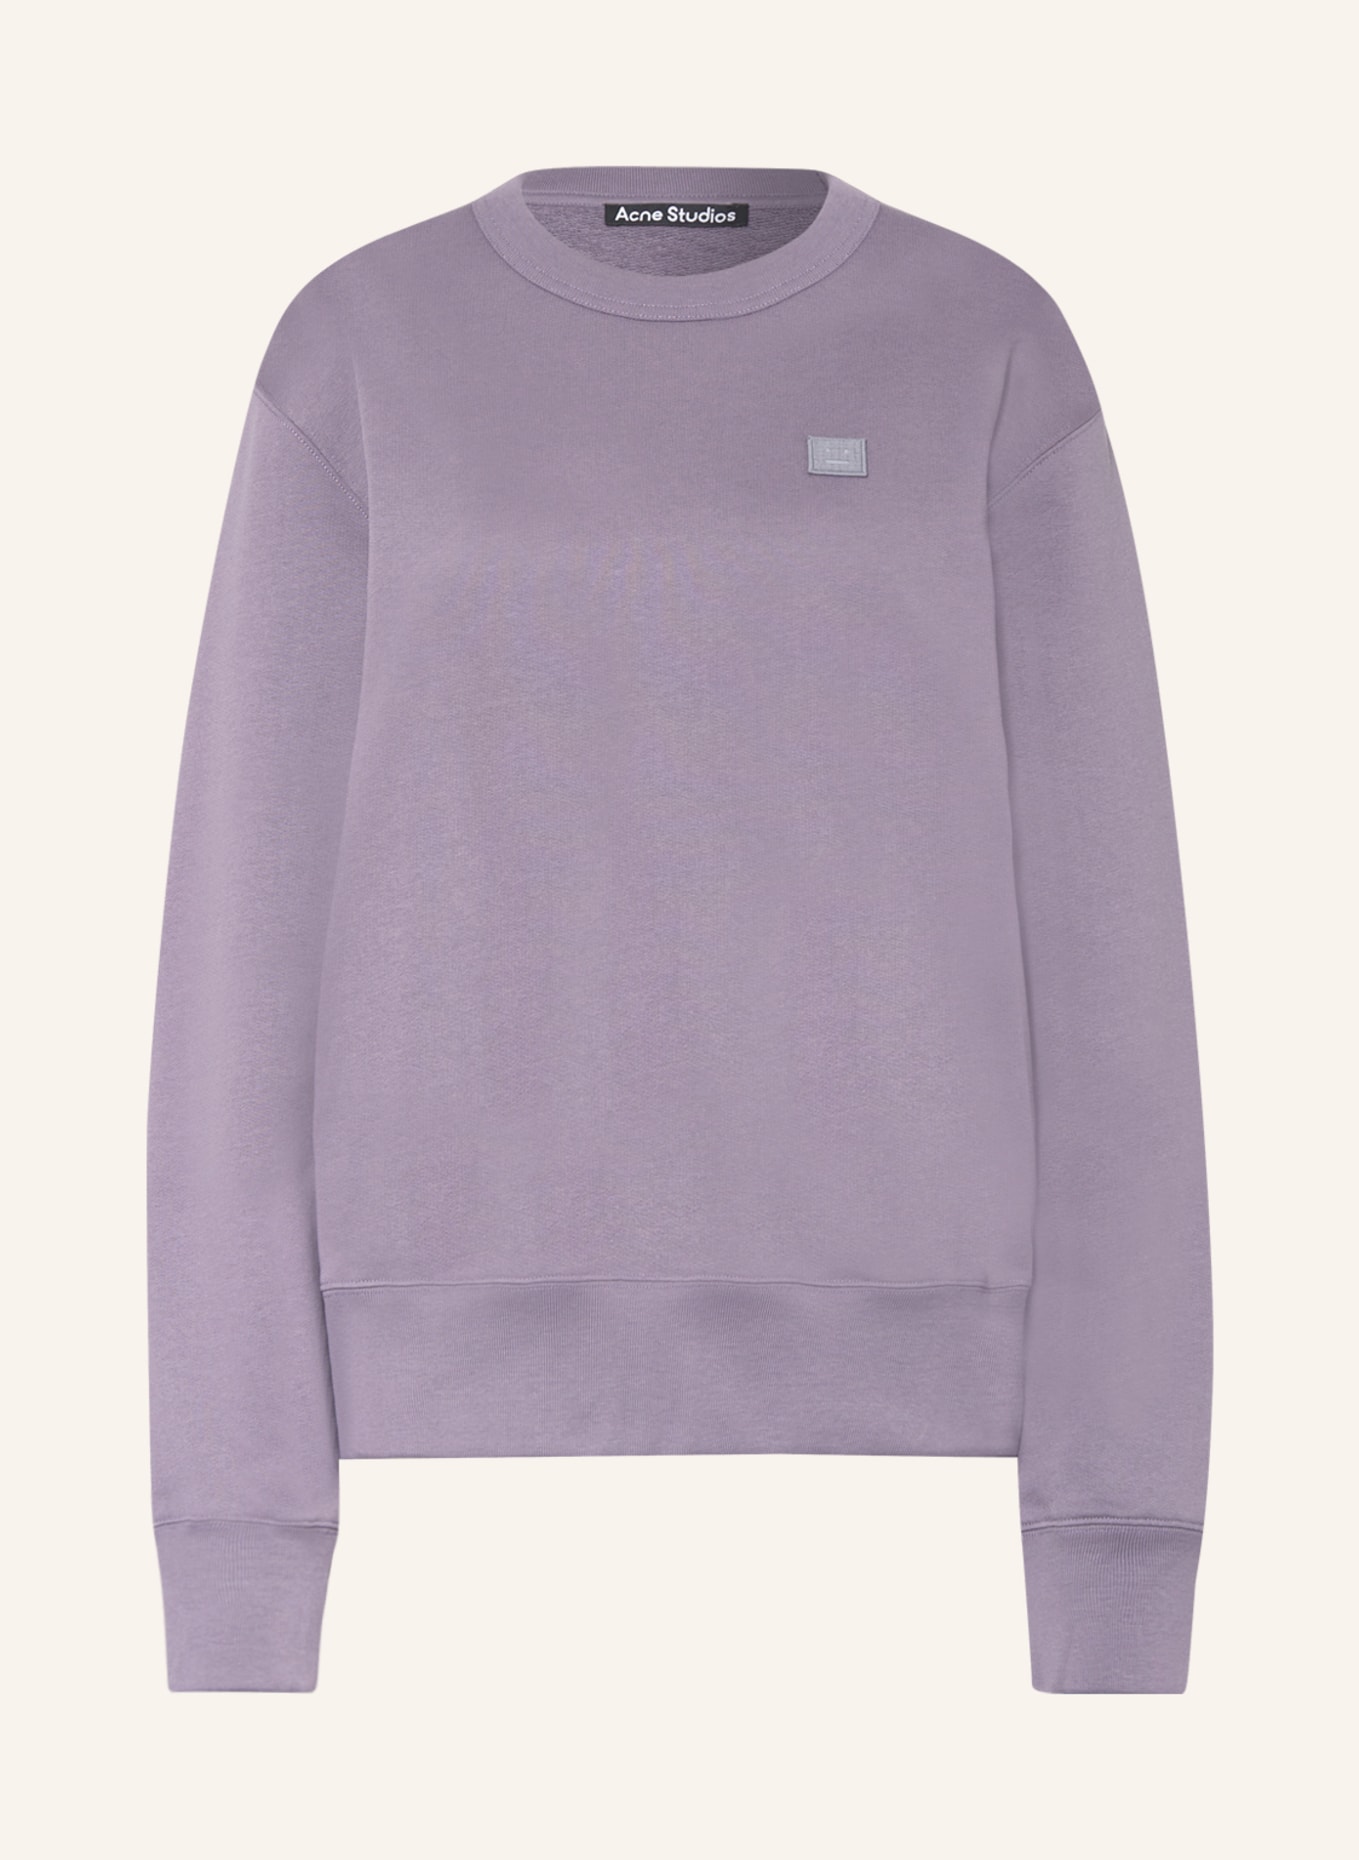 Acne Studios Sweatshirt in lila